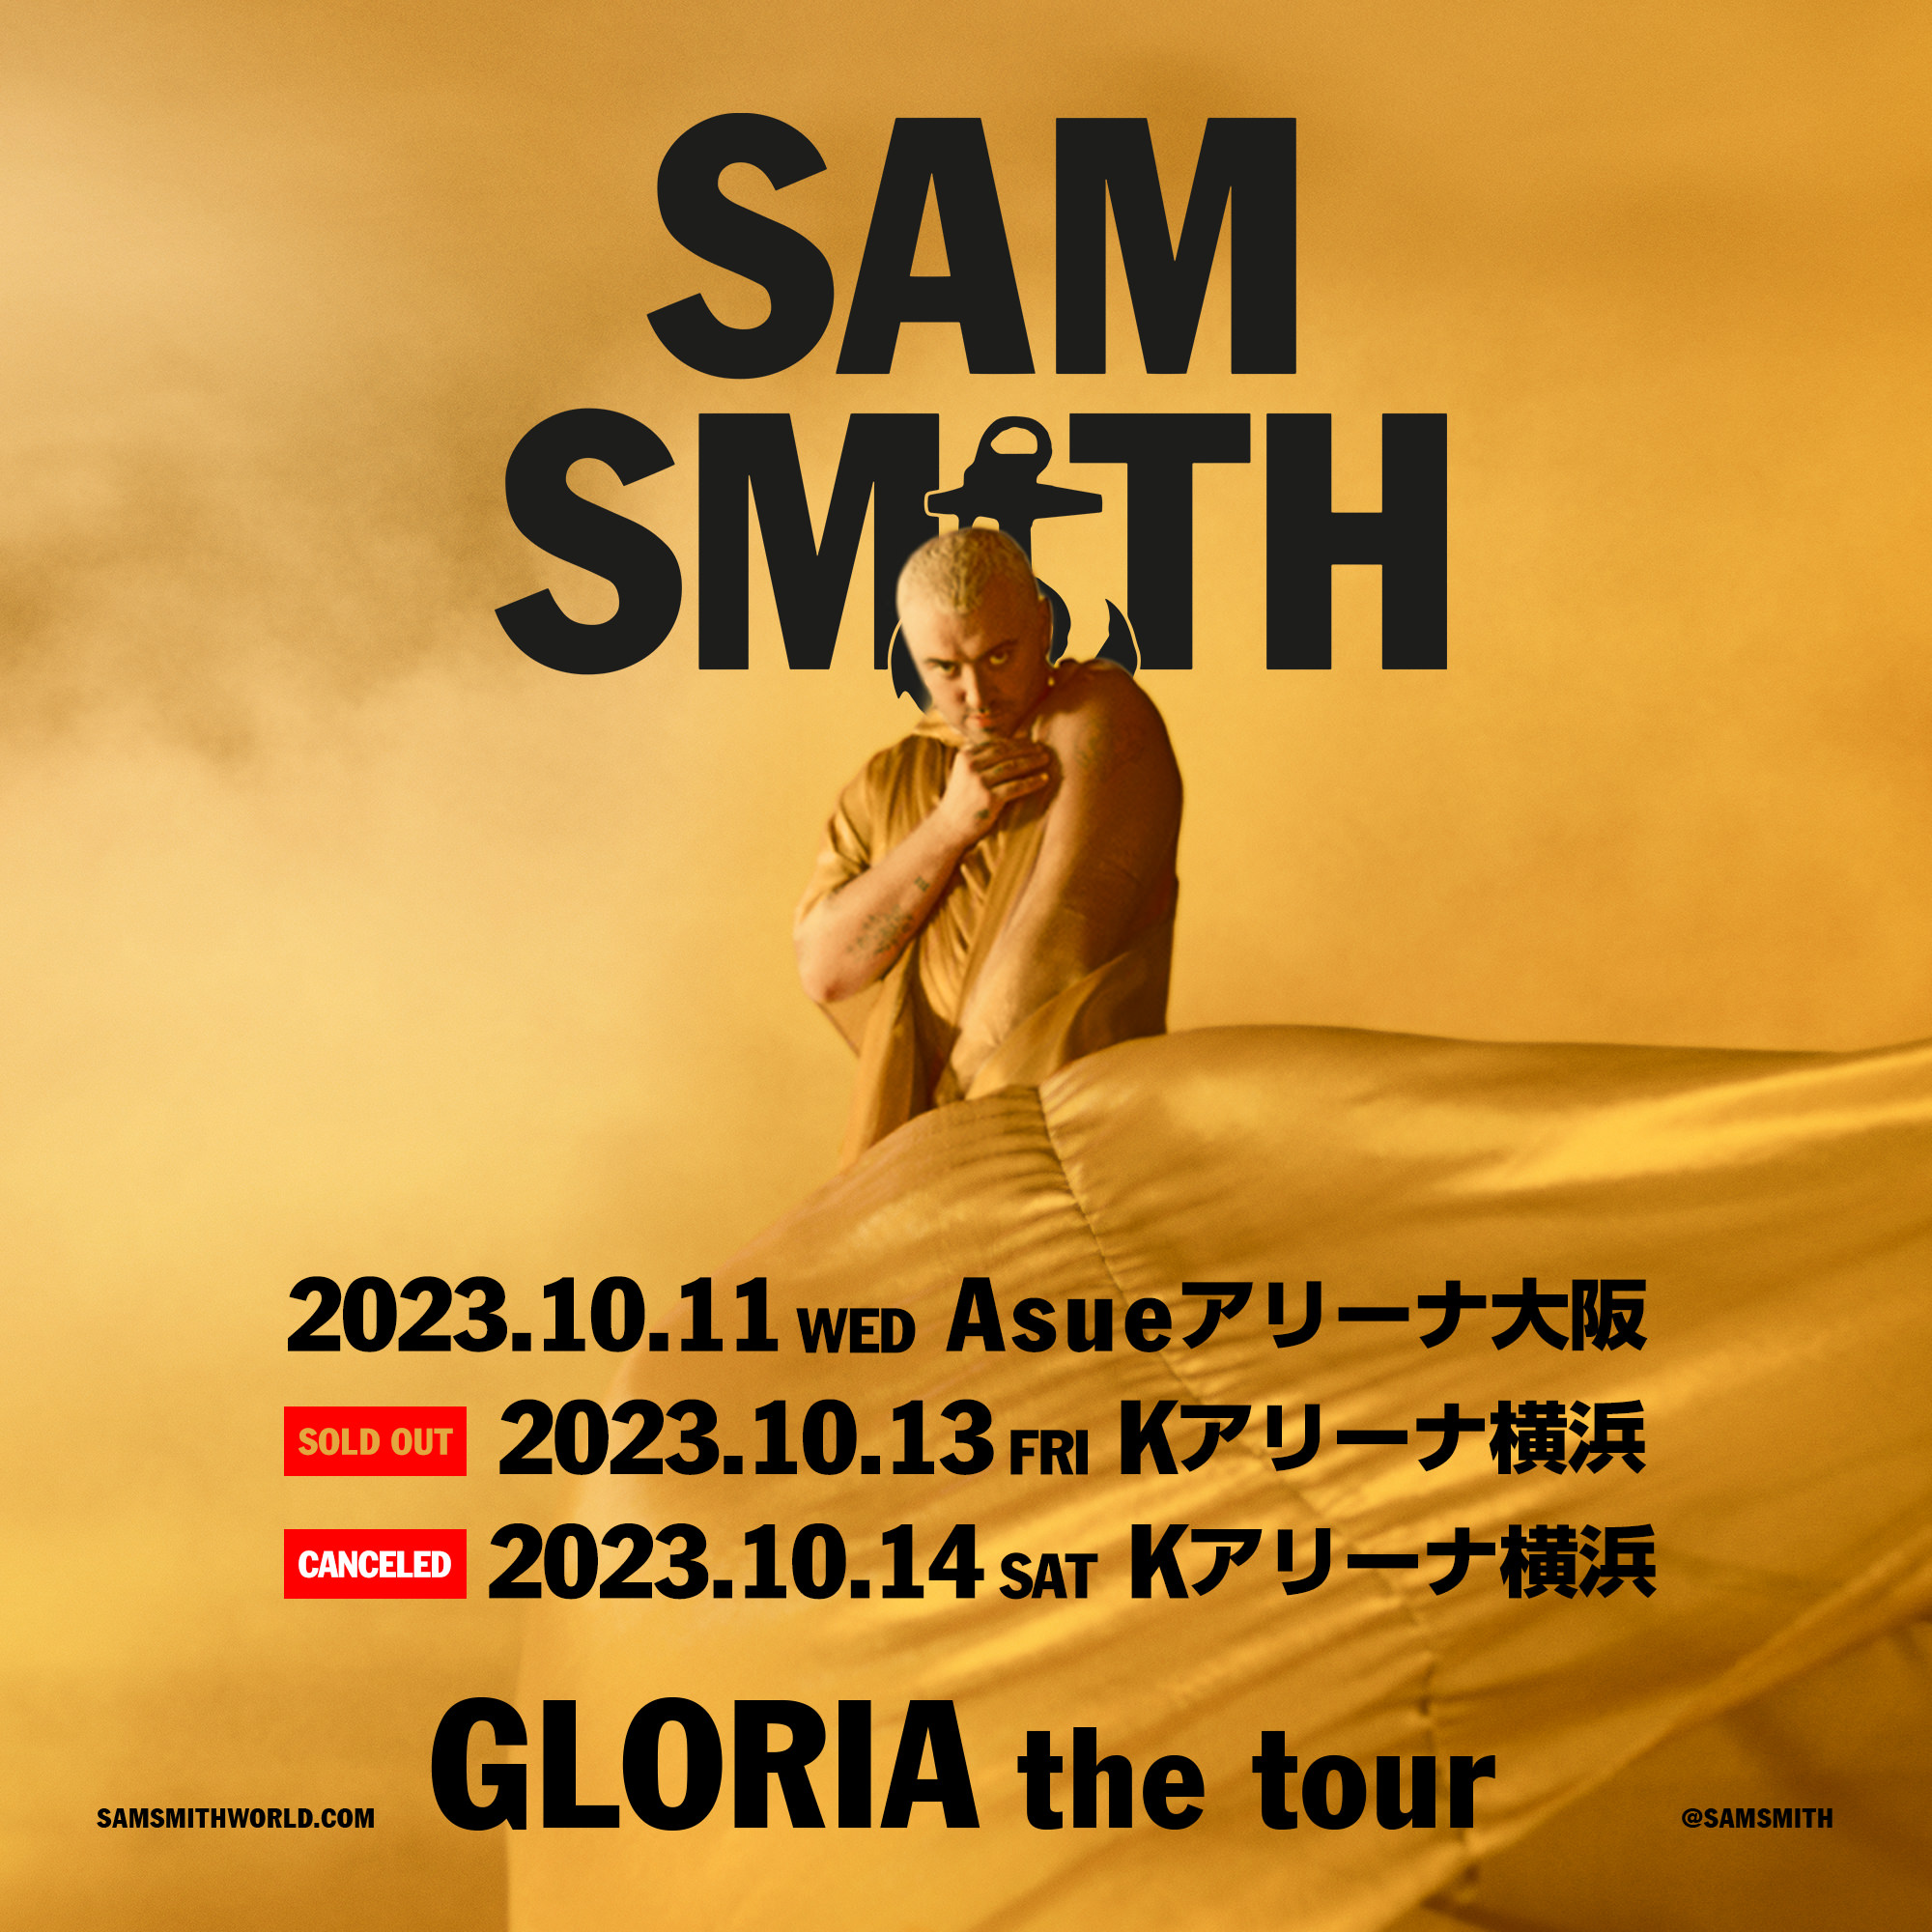 SAM SMITH | サム・スミス来日公演公式サイト - GLORIA the tour -